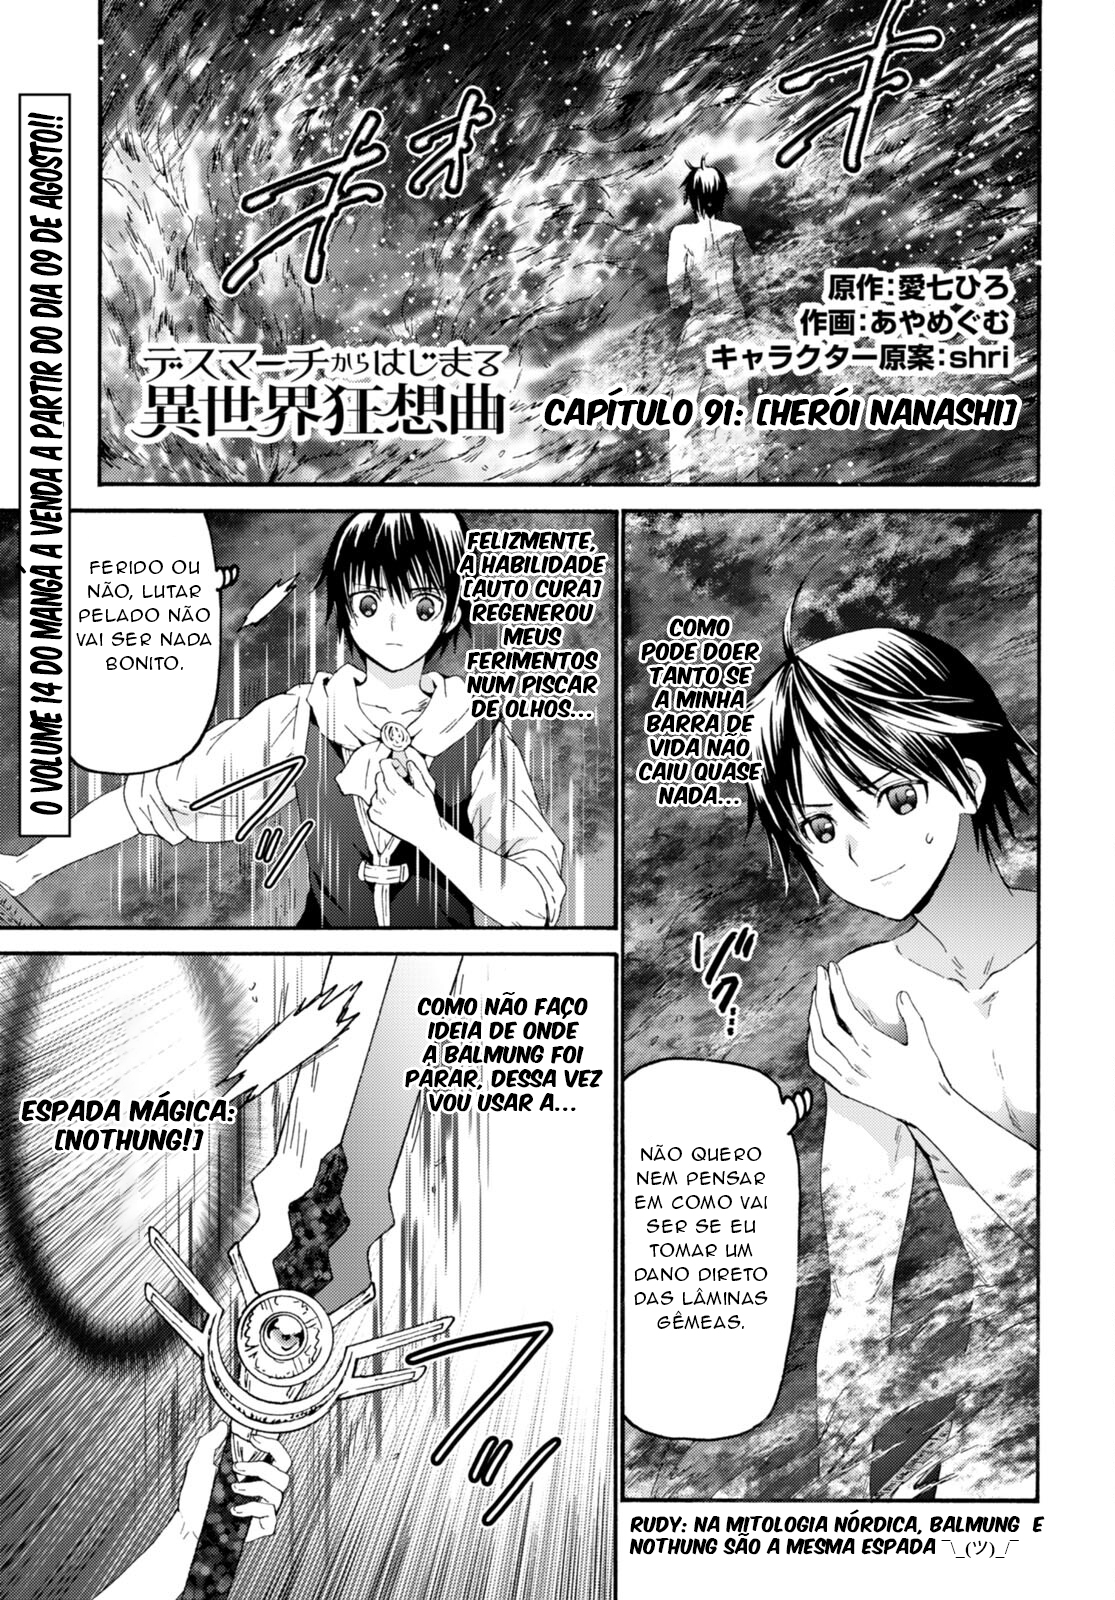 Comic Dragon Age: Death March Kara Hajimaru Isekai Kyousoukyoku / Death March To The Parallel World Rhapsody Manga 91